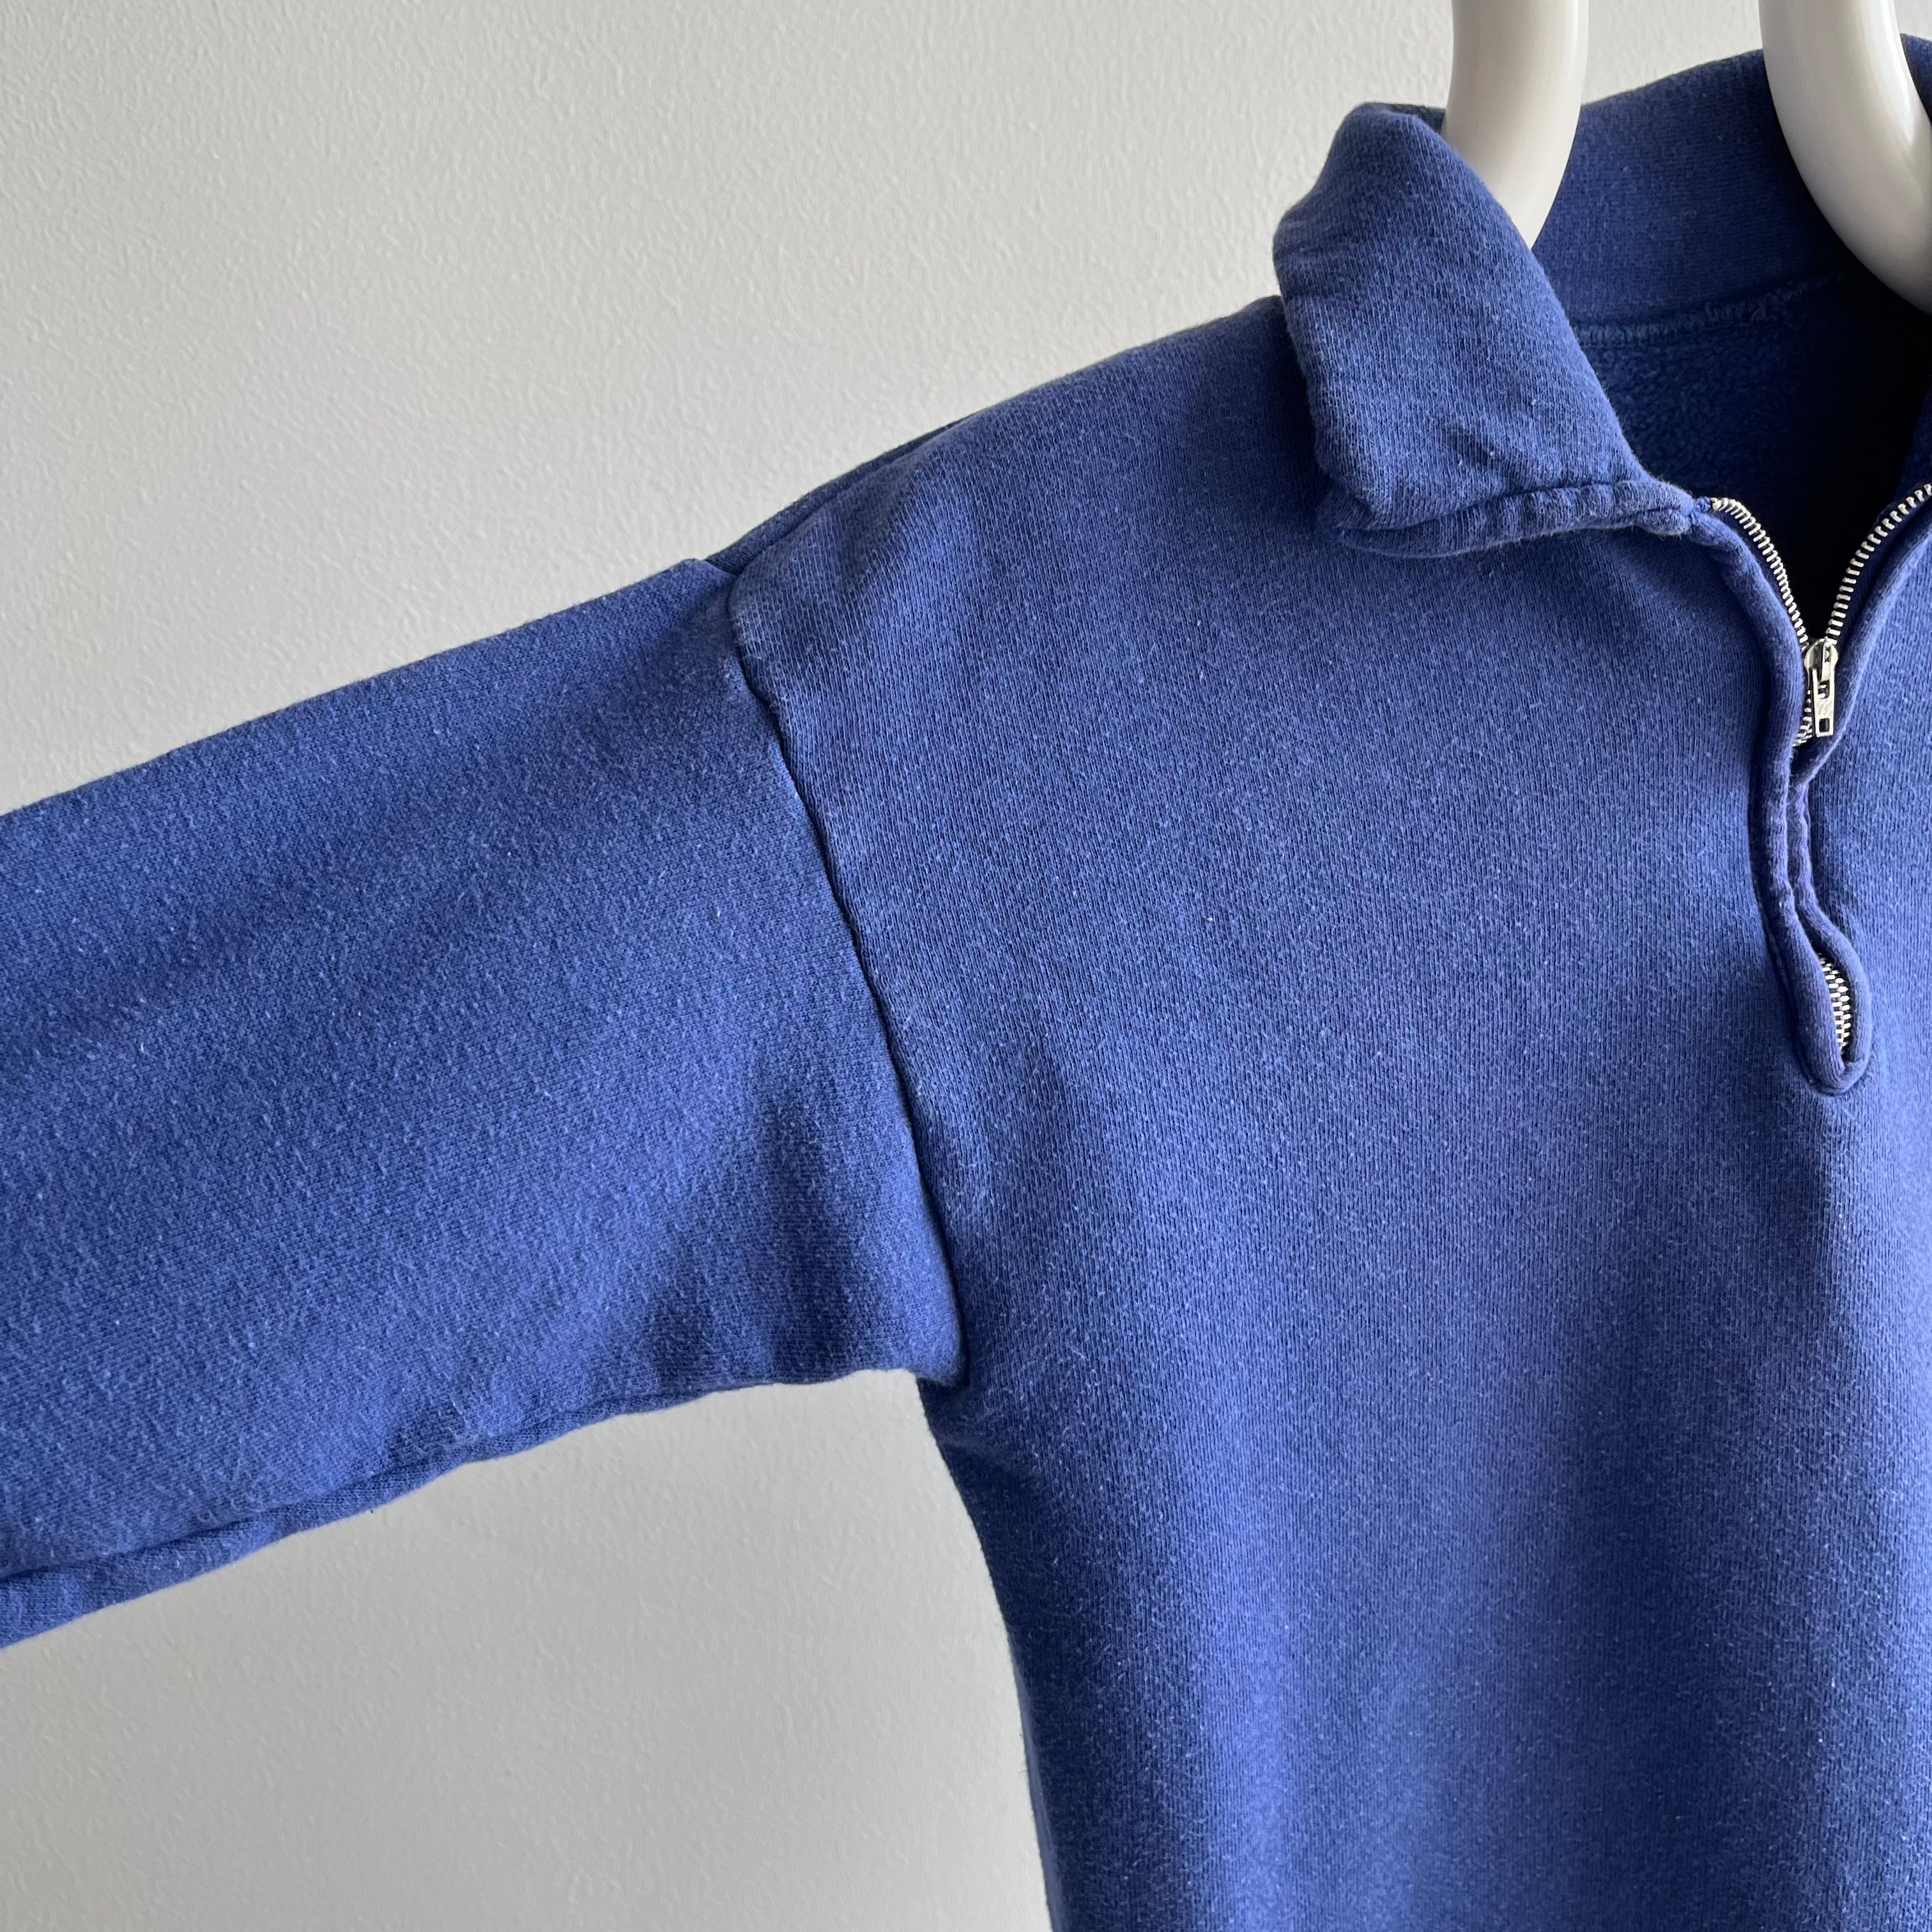 1950/60s 100% Cotton by Sportswear 1/4 Zip Up Sweatshirt with Coats & Clark Zipper - RARE